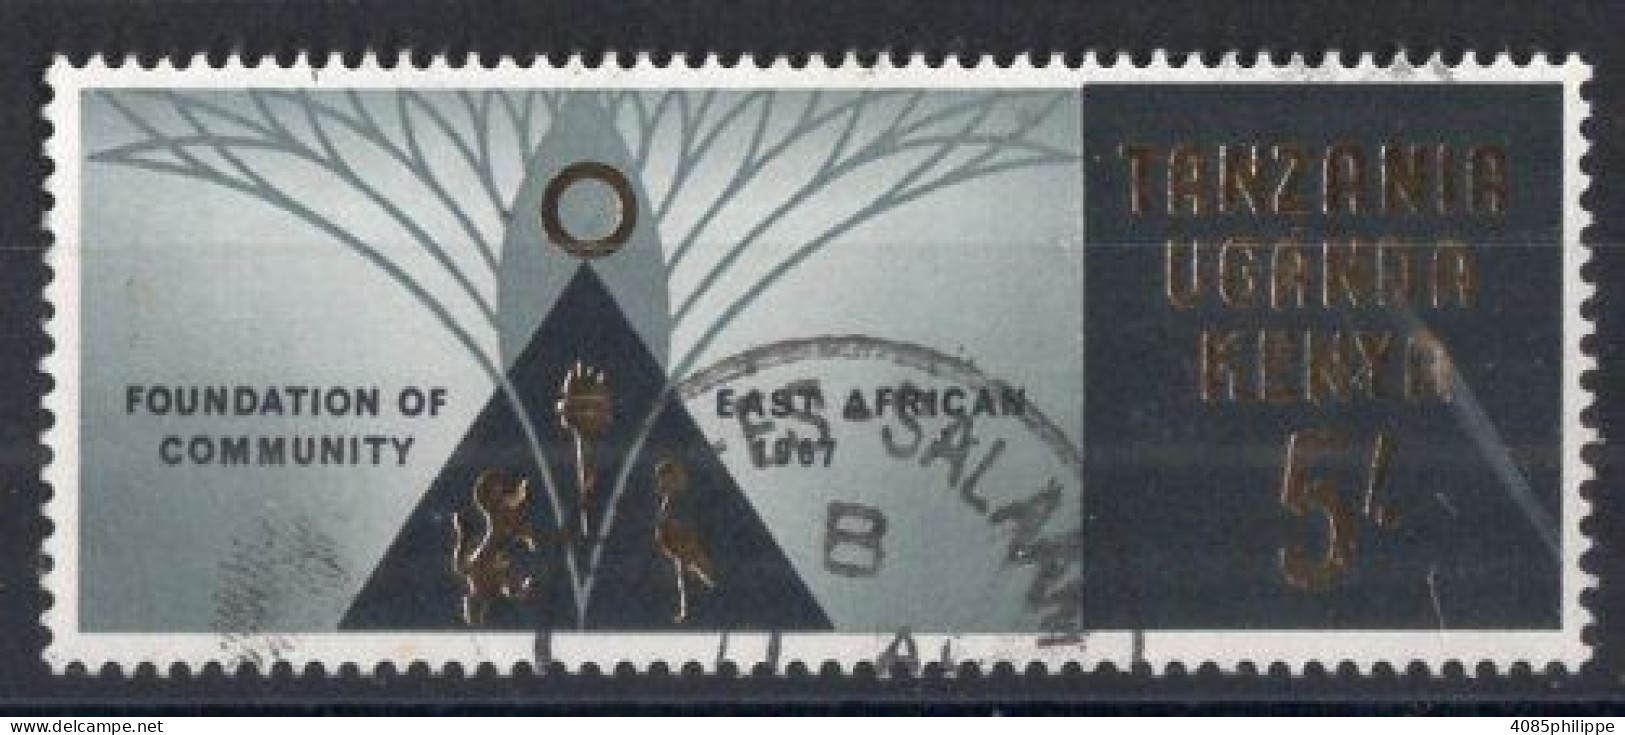 EST-AFRICAIN Timbre-Poste N°165 Oblitéré TB Cote : 1.85€ - Kenya, Ouganda & Tanzanie